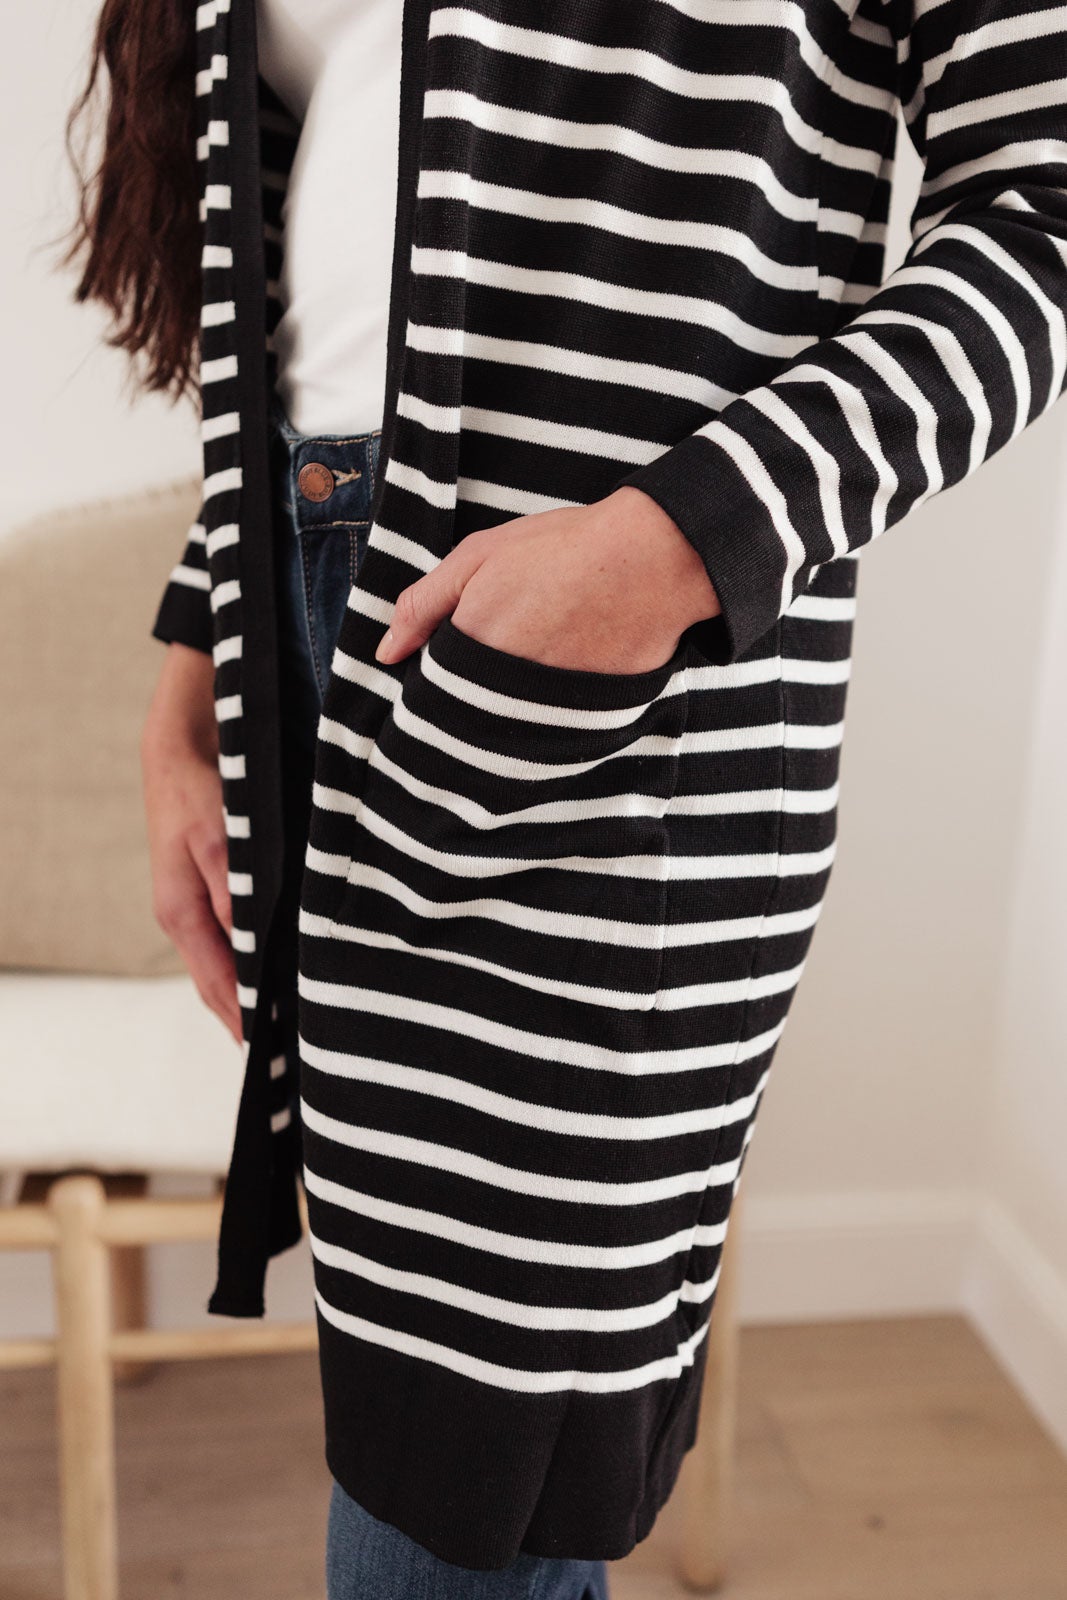 Swift Stripes Pocket Cardigan in Black & White (Online Exclusive)